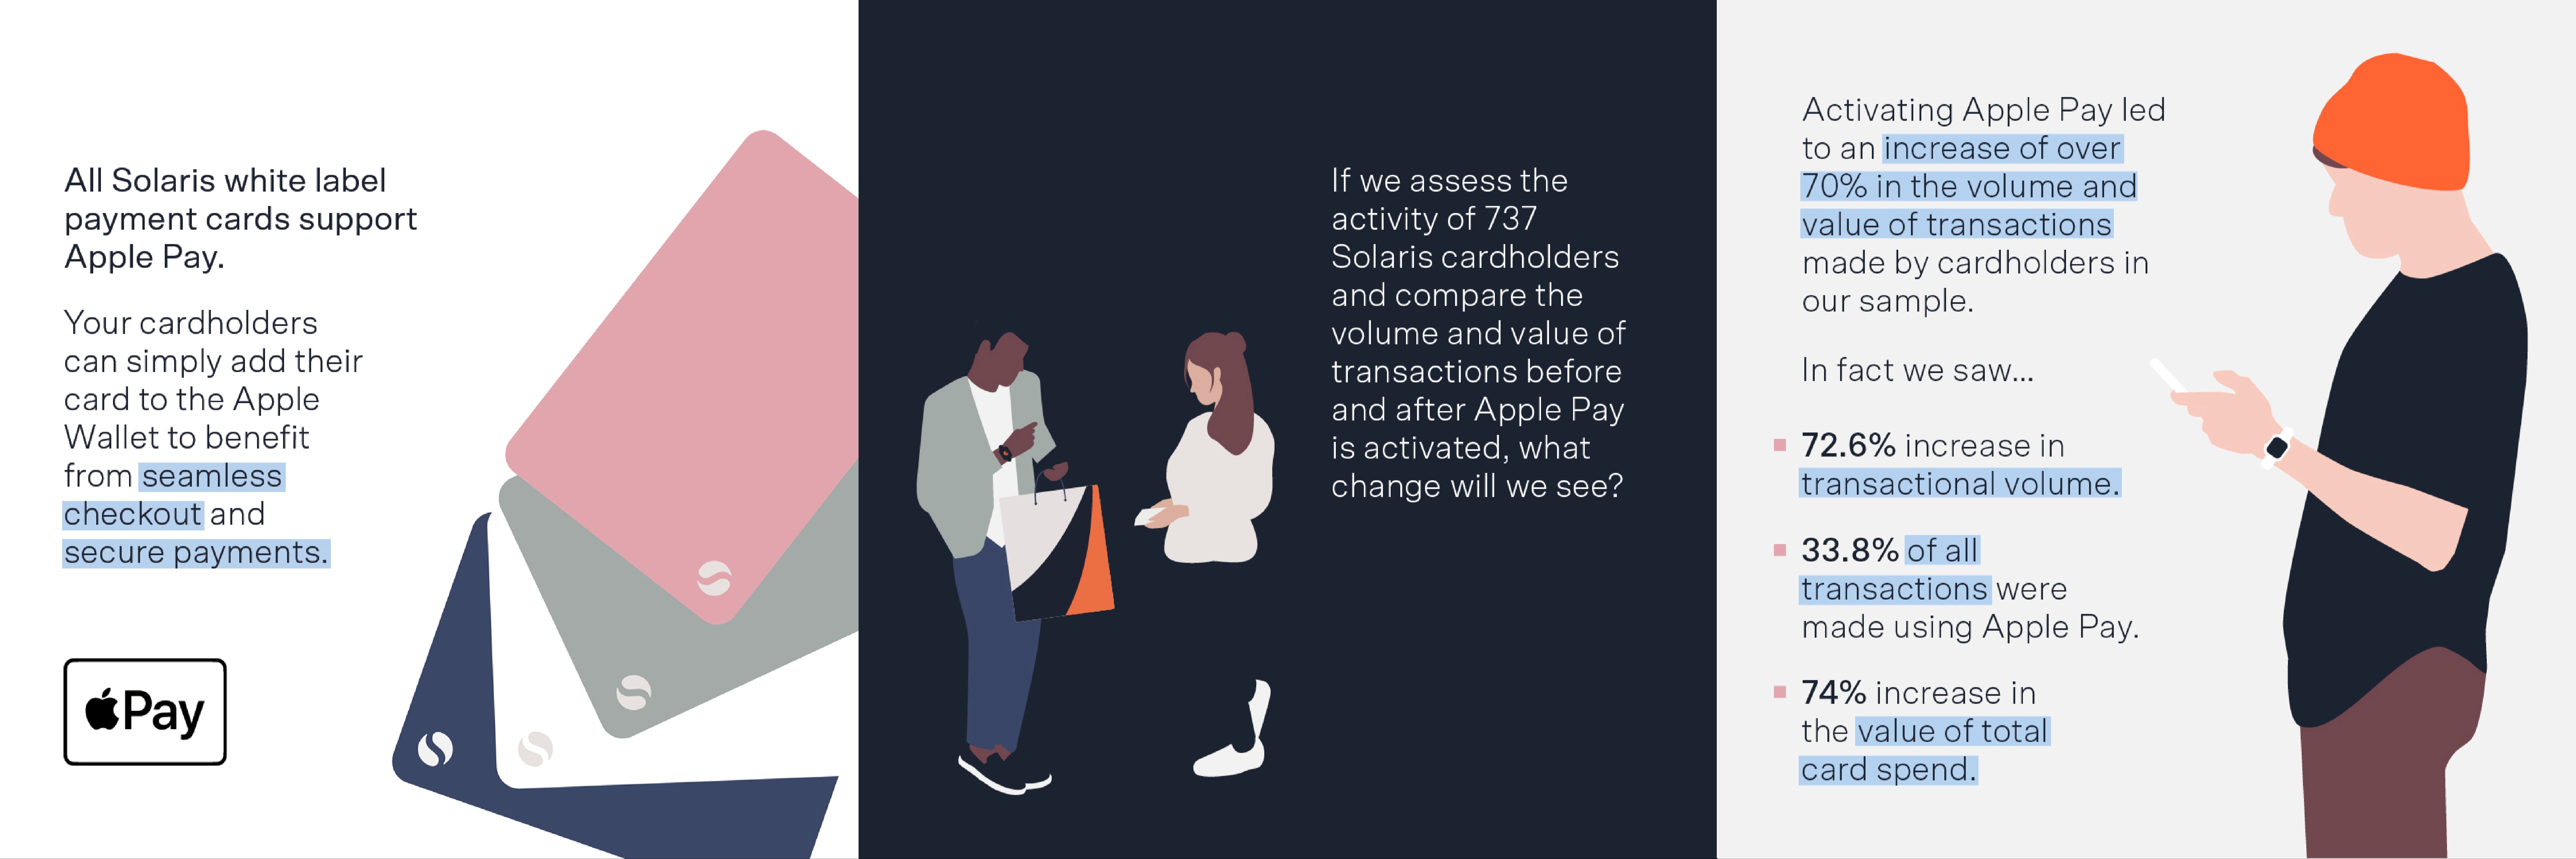 Apple Pay - Case Study